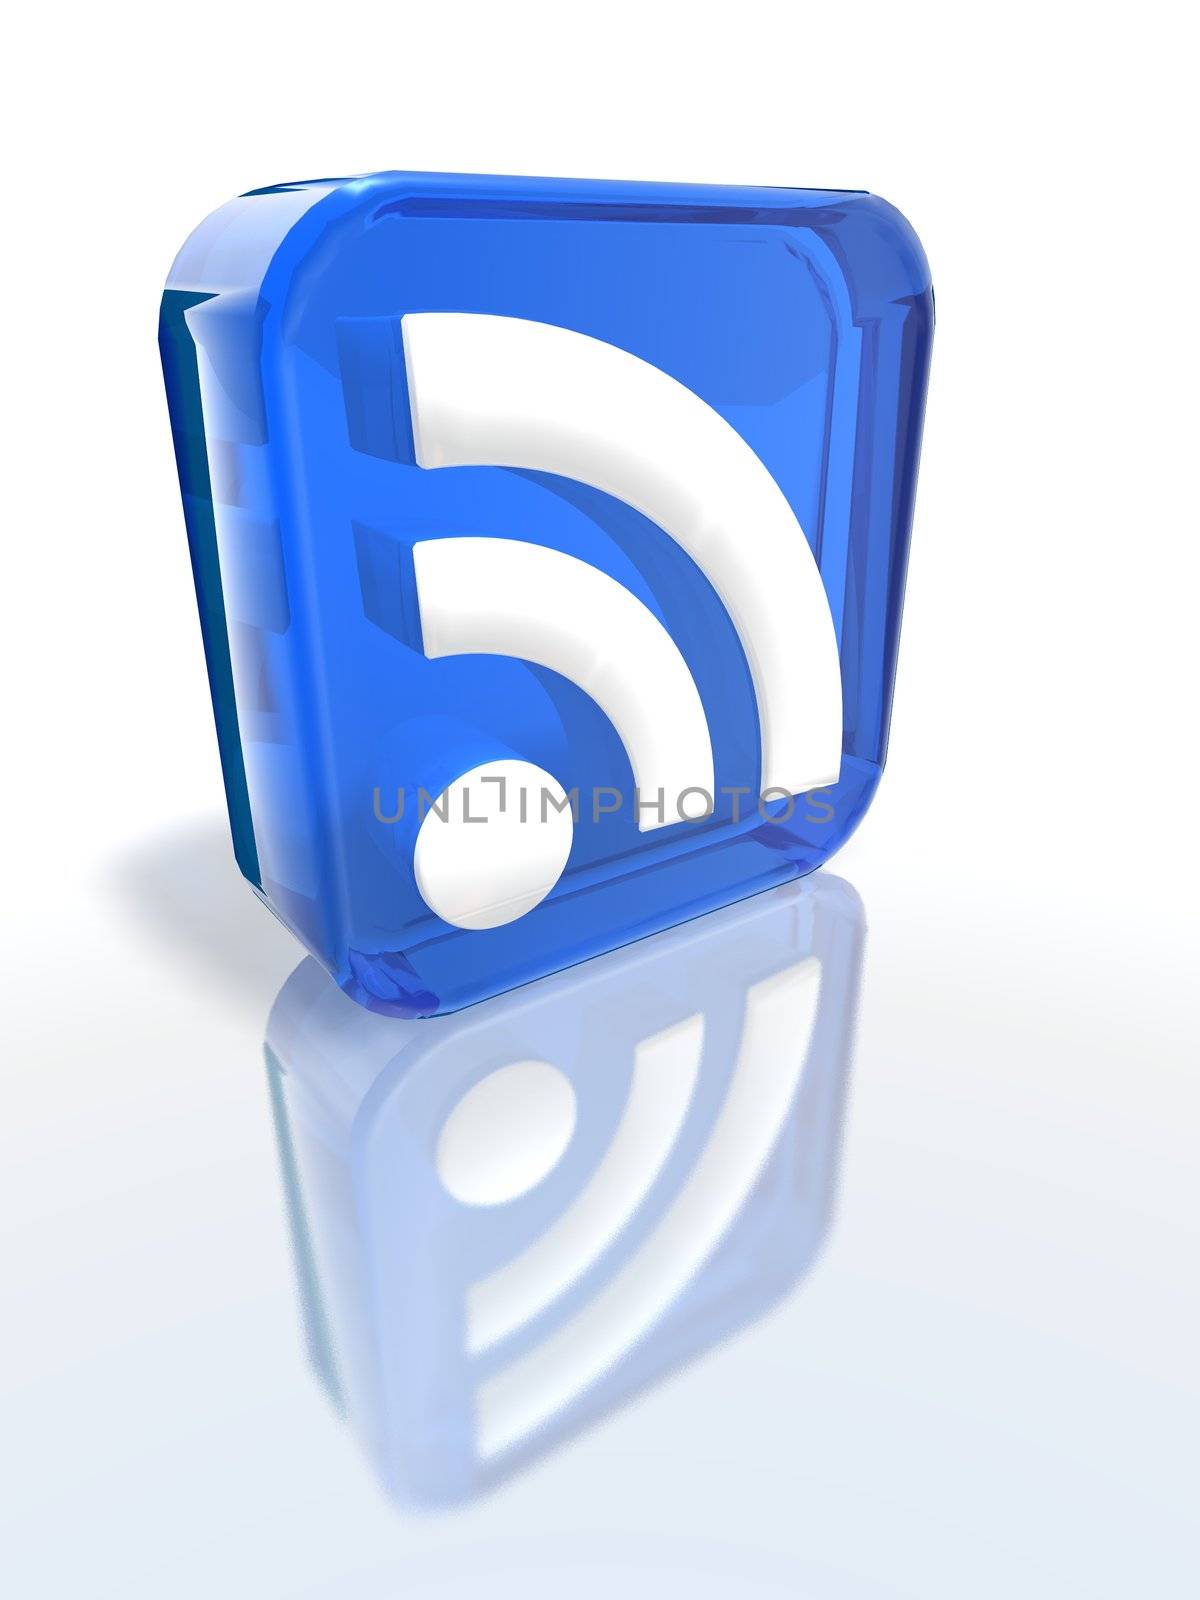 a 3d render of a blue RSS sign